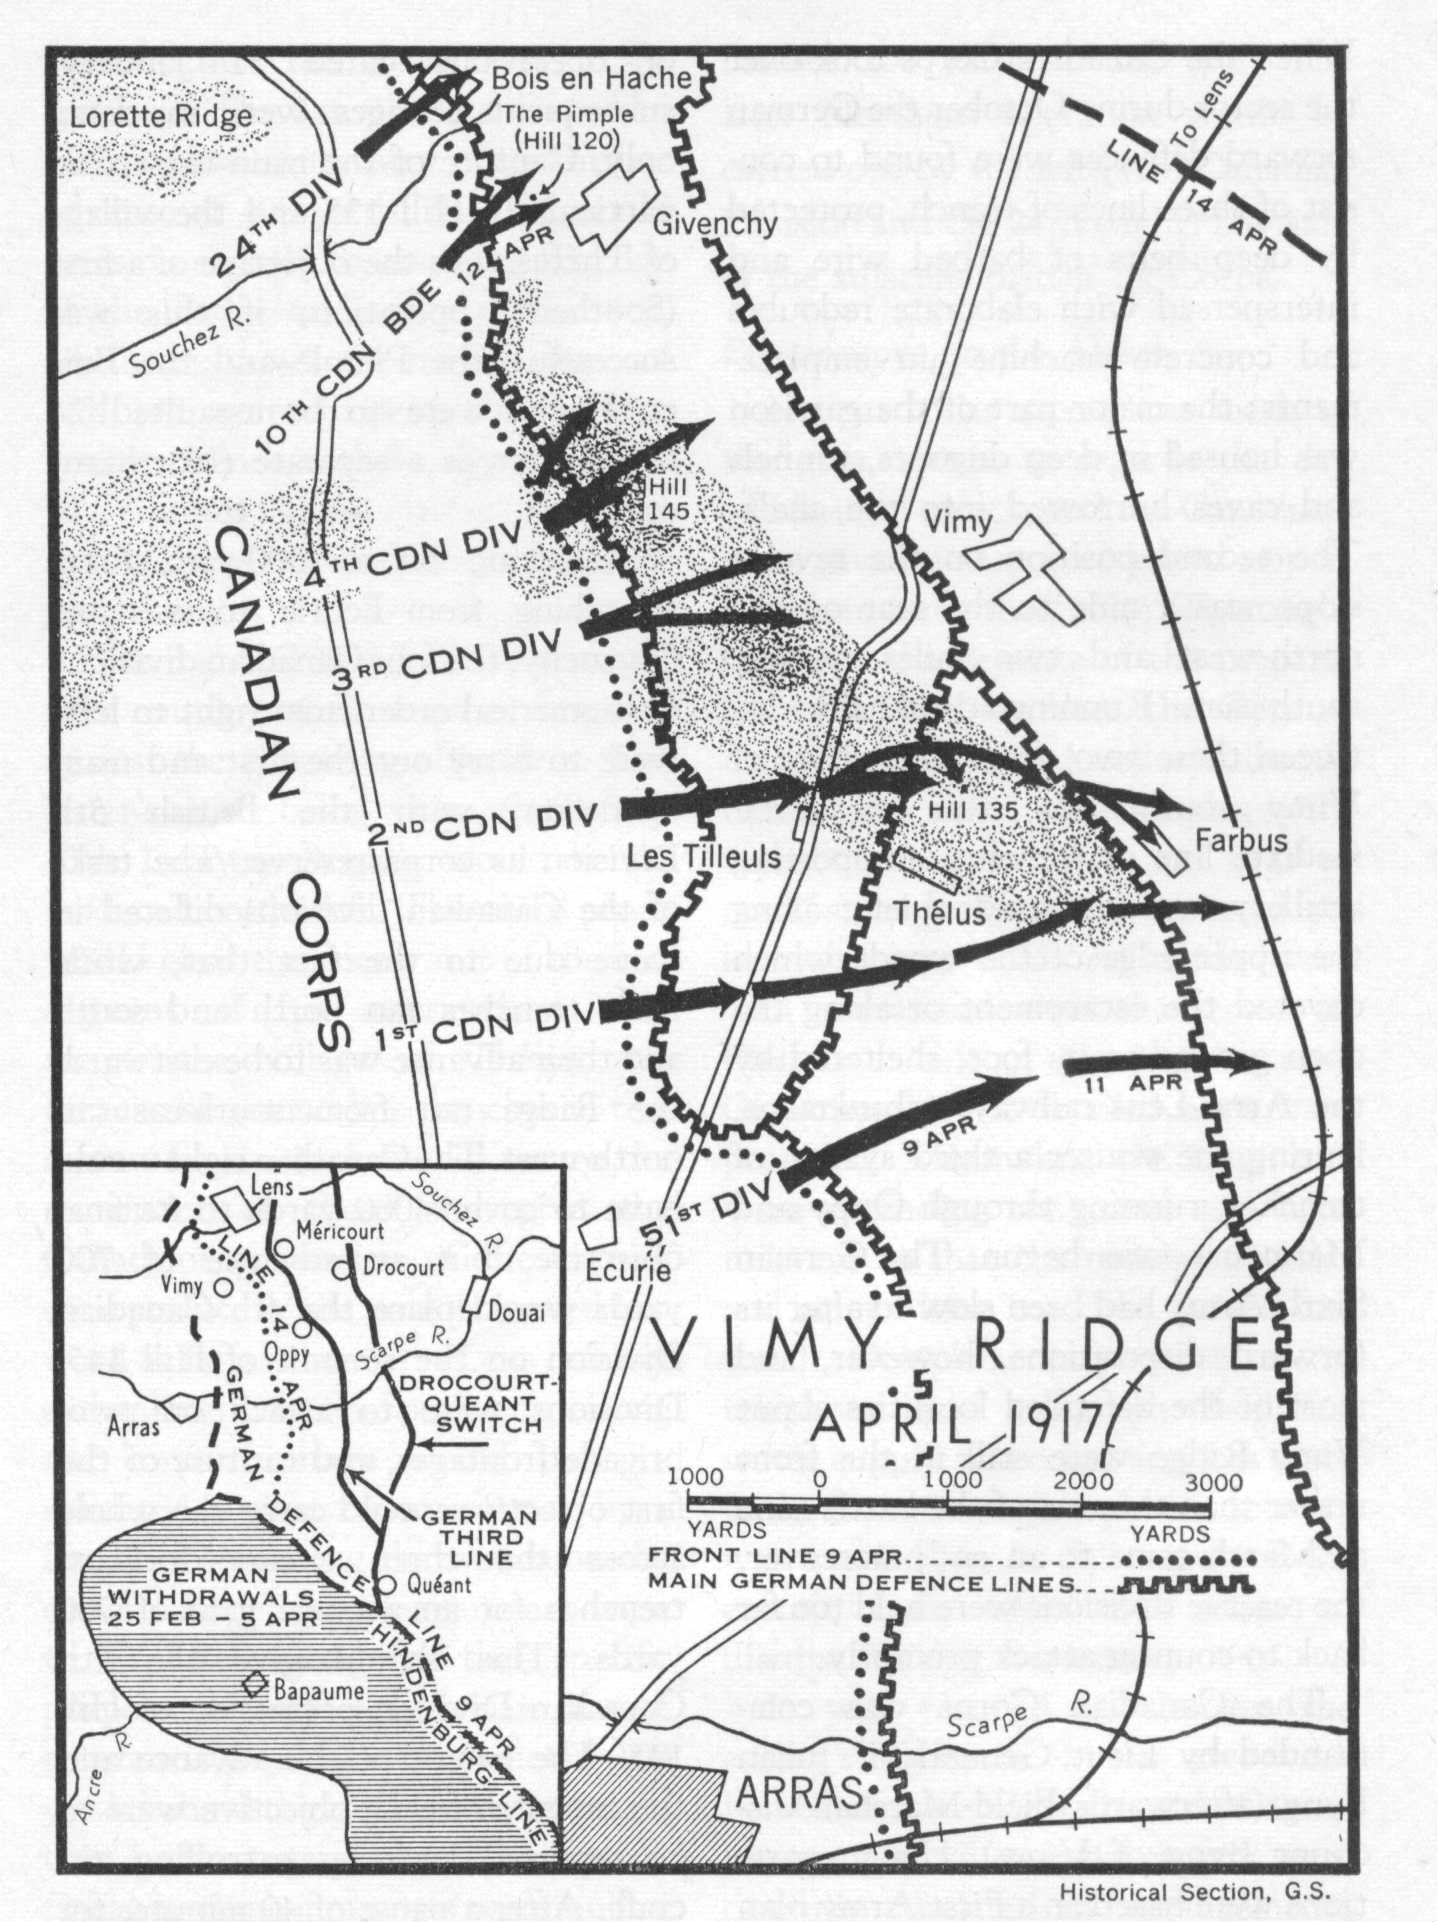 Vimy Ridge April 1917 Battle Map